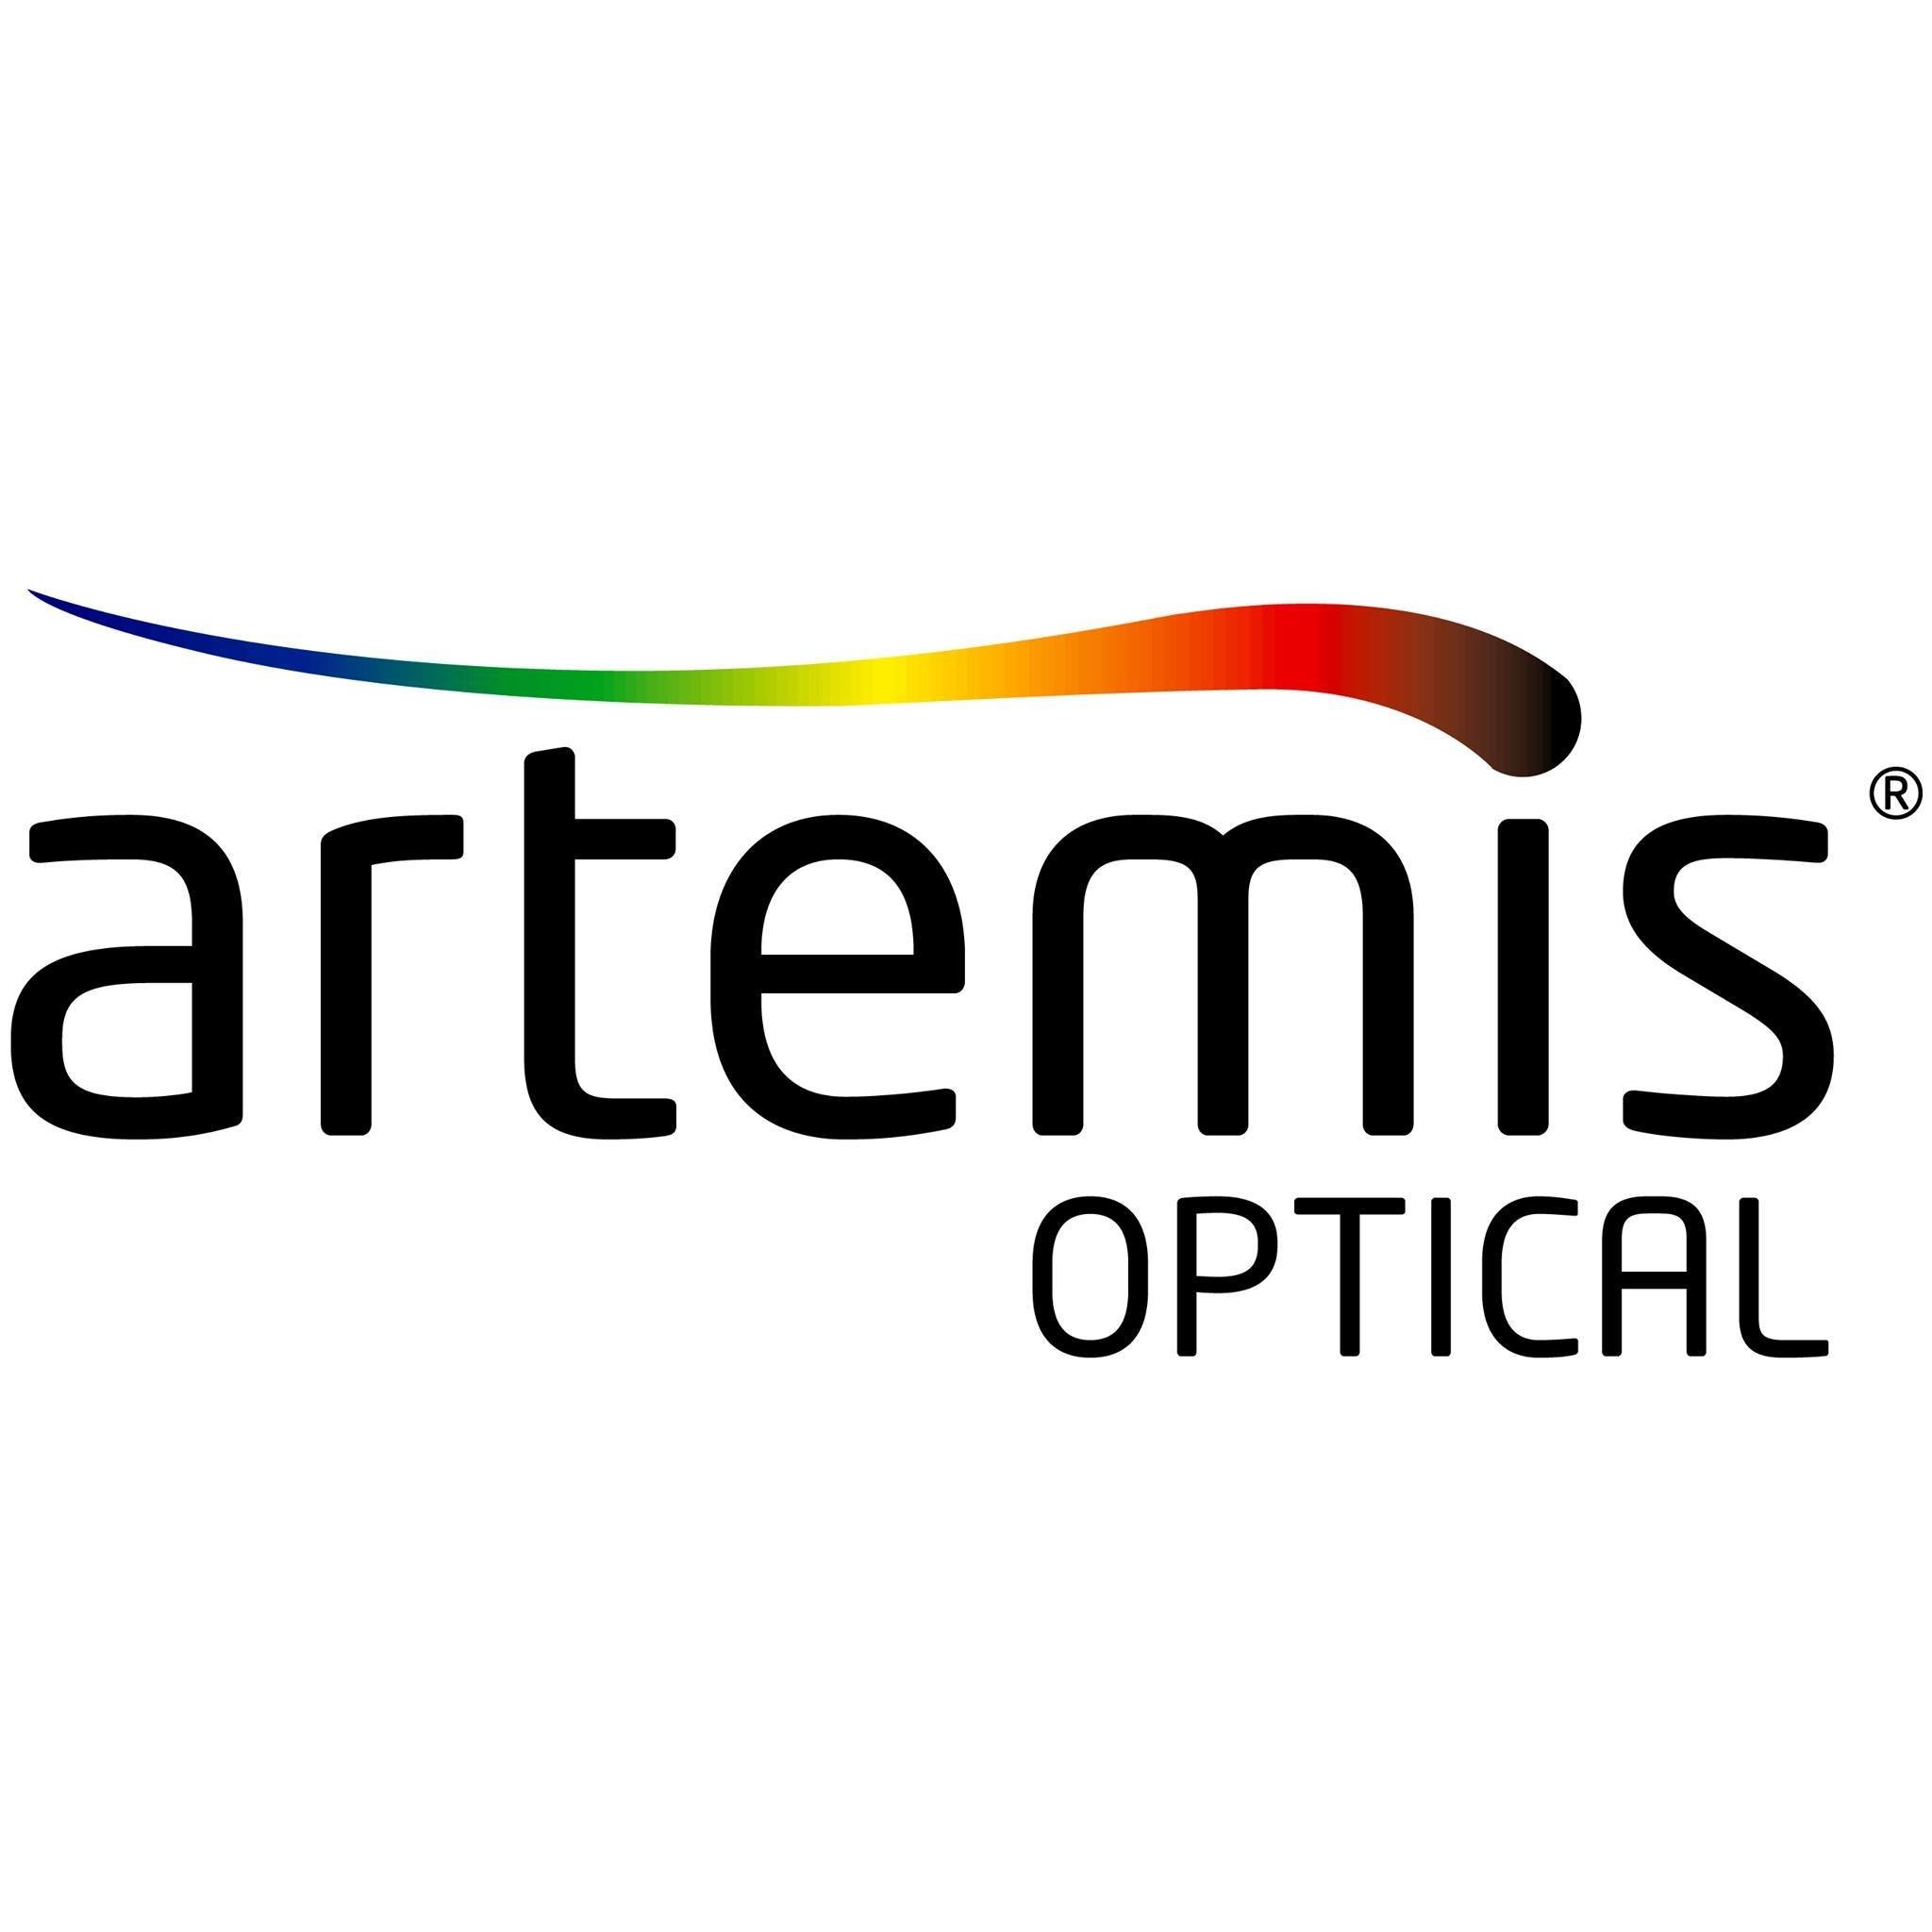 Artemis Optical.jpg